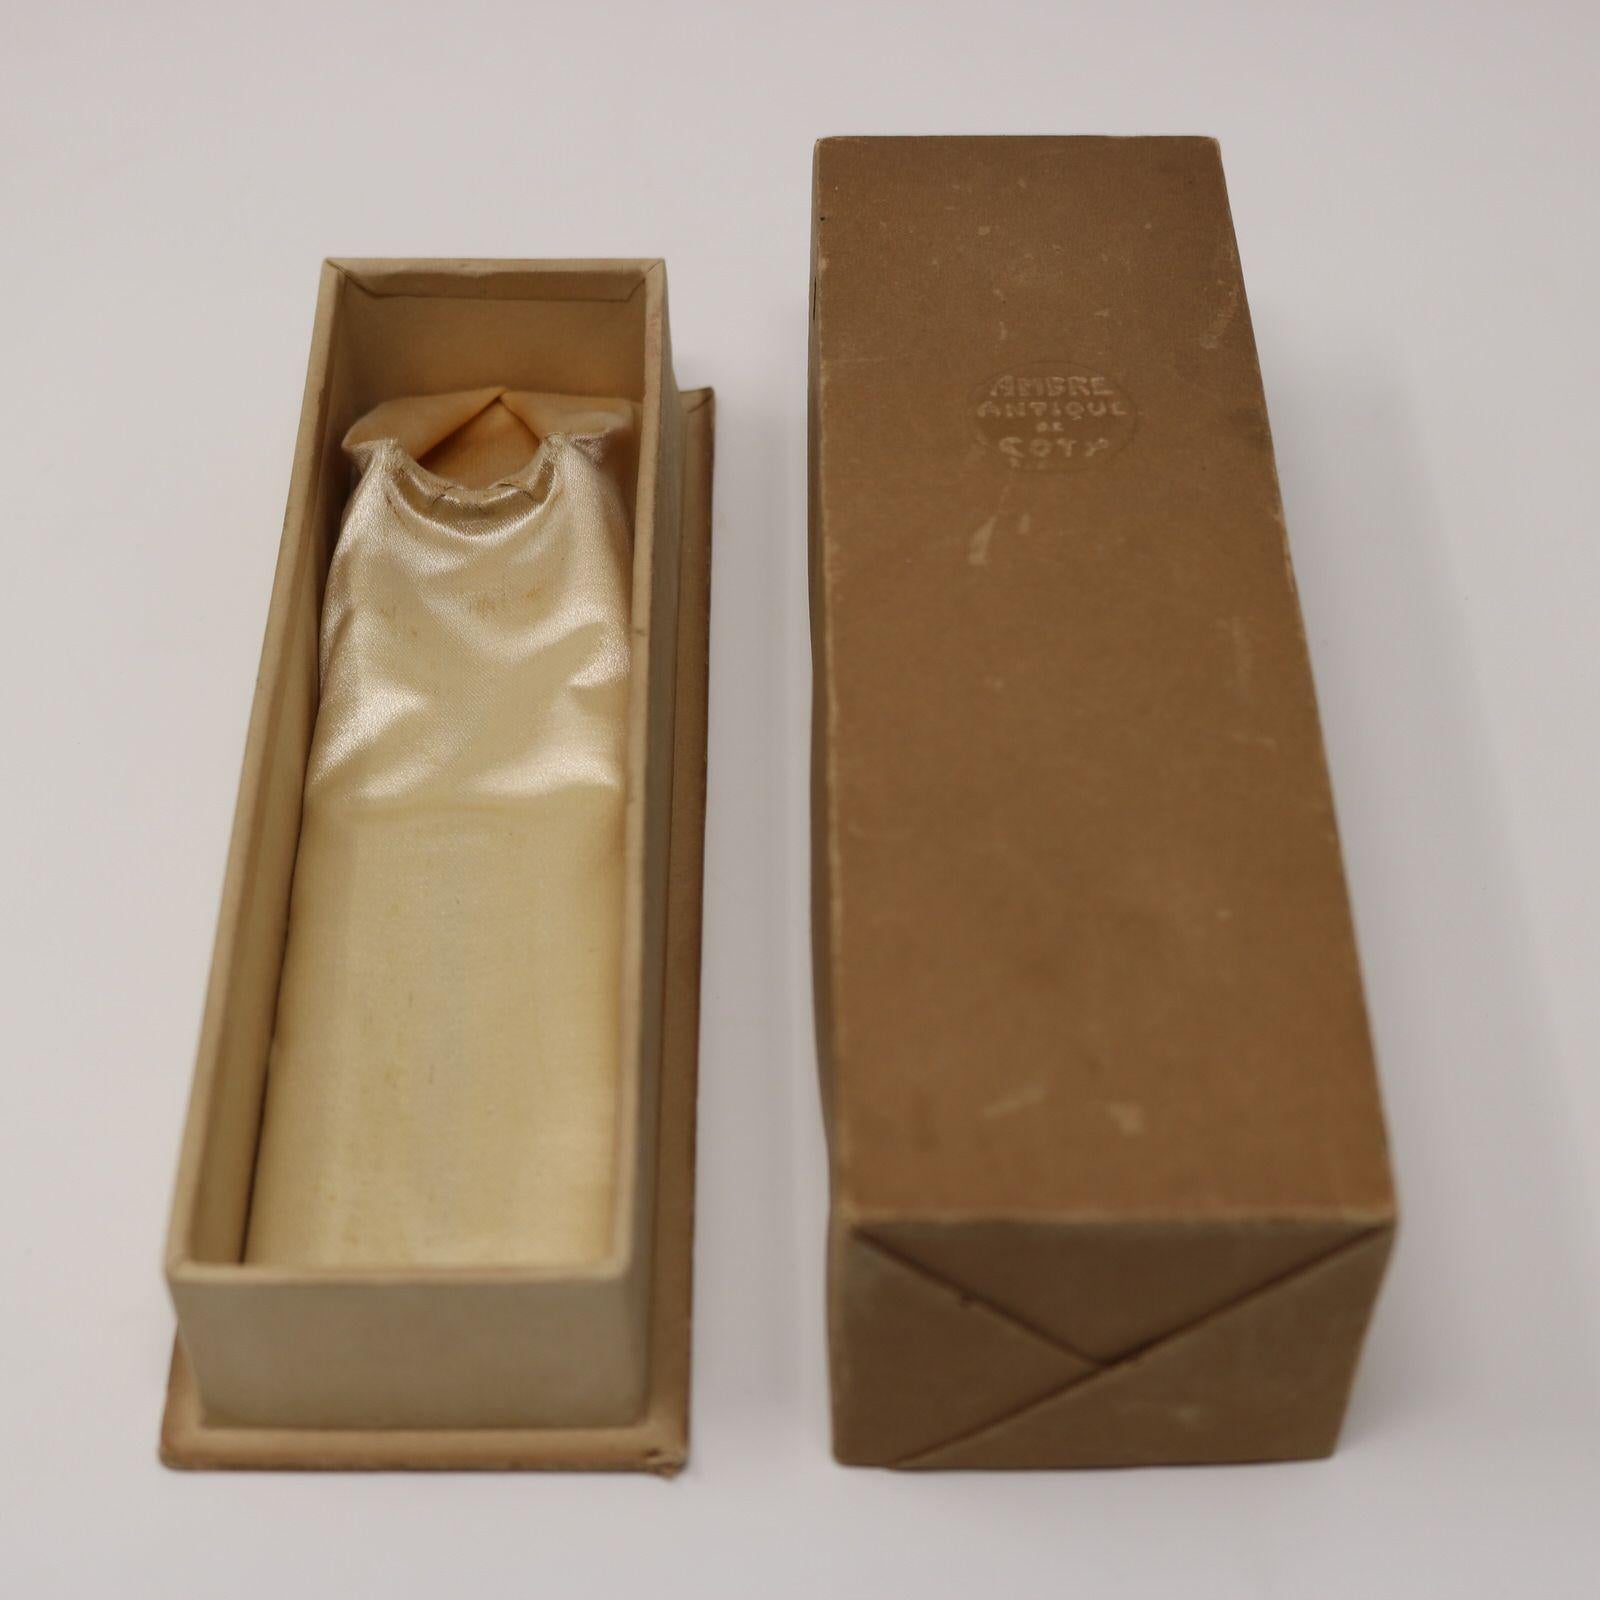 Rene Lalique Glass Ambre Antique Perfume Bottle with Box For Sale 9